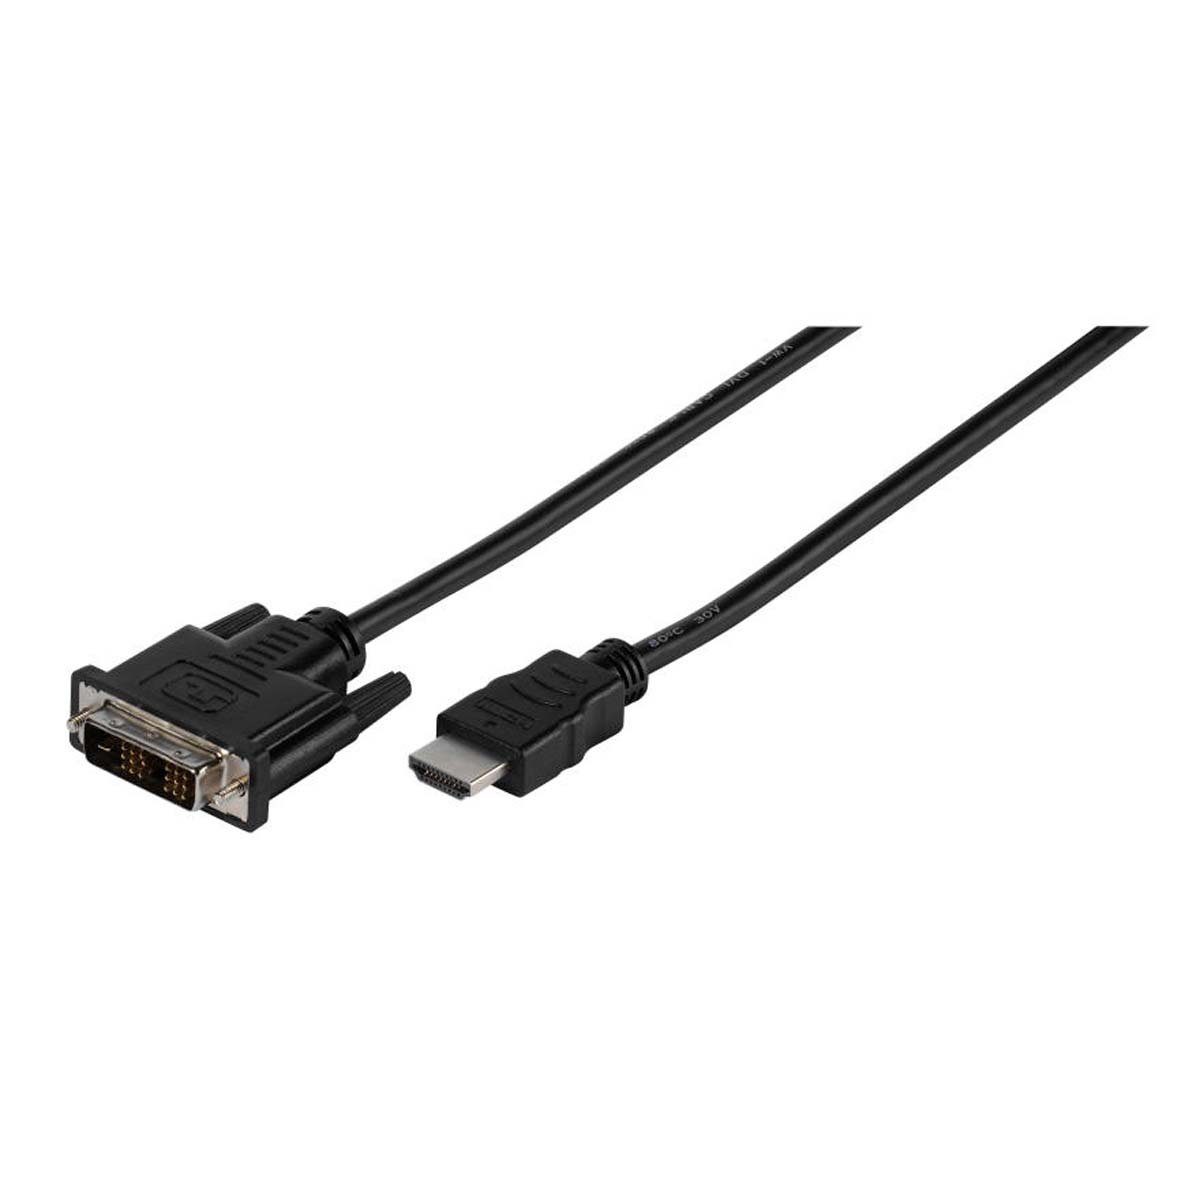 Vivanco Audio- & Video-Kabel, HDMI, Hdmi zu DVI Kabel (500 cm)